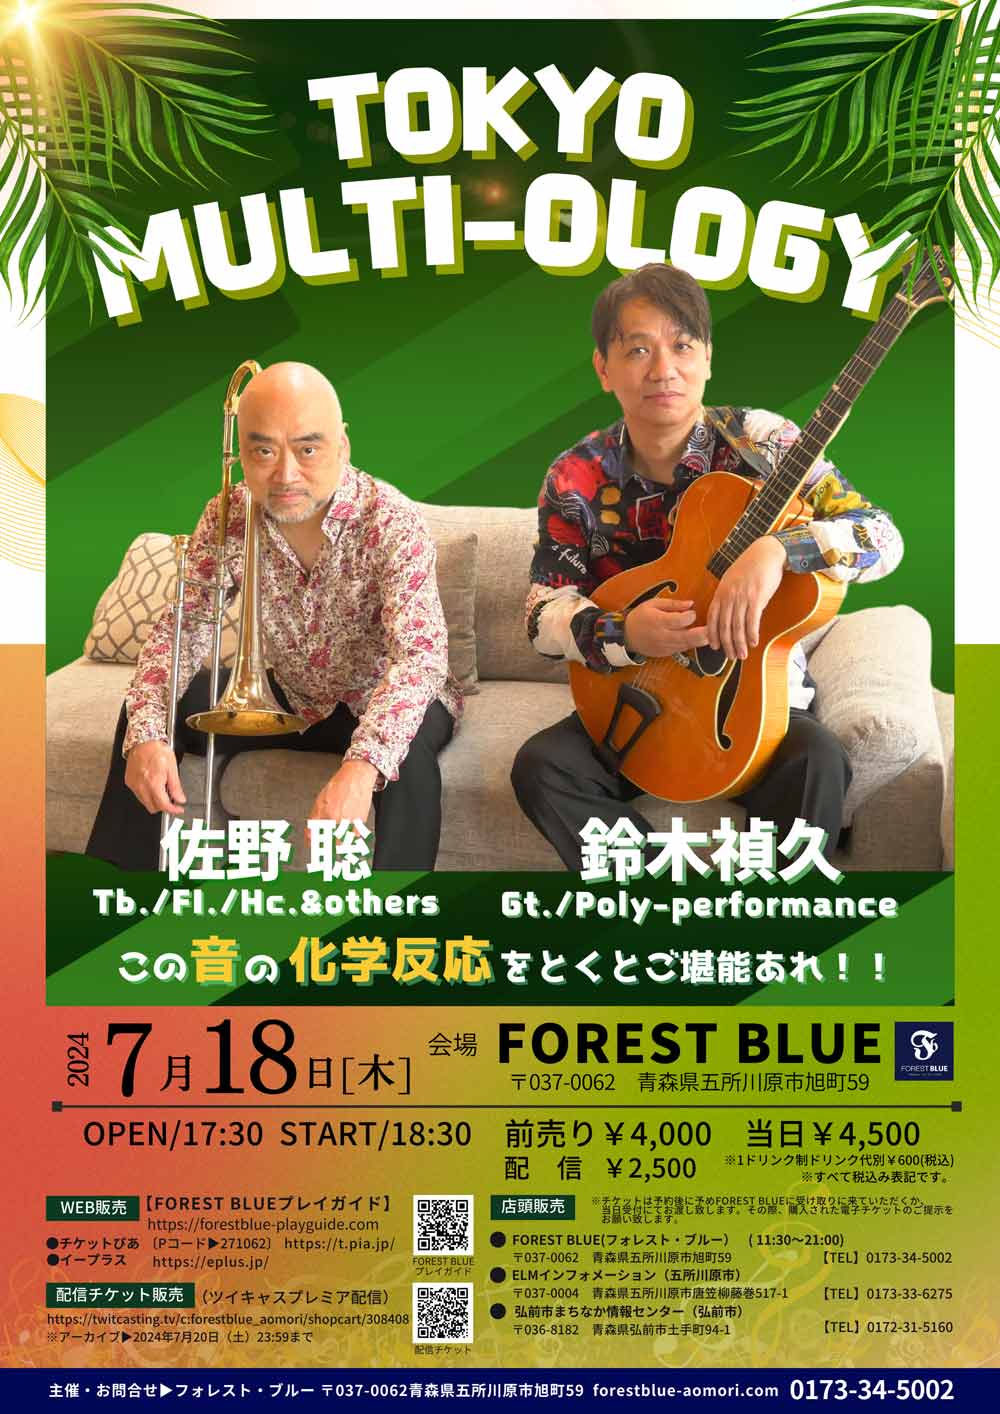 【TOKYO MULTI-OLOGY】チケット販売開始のお知らせ 240718 img1 1